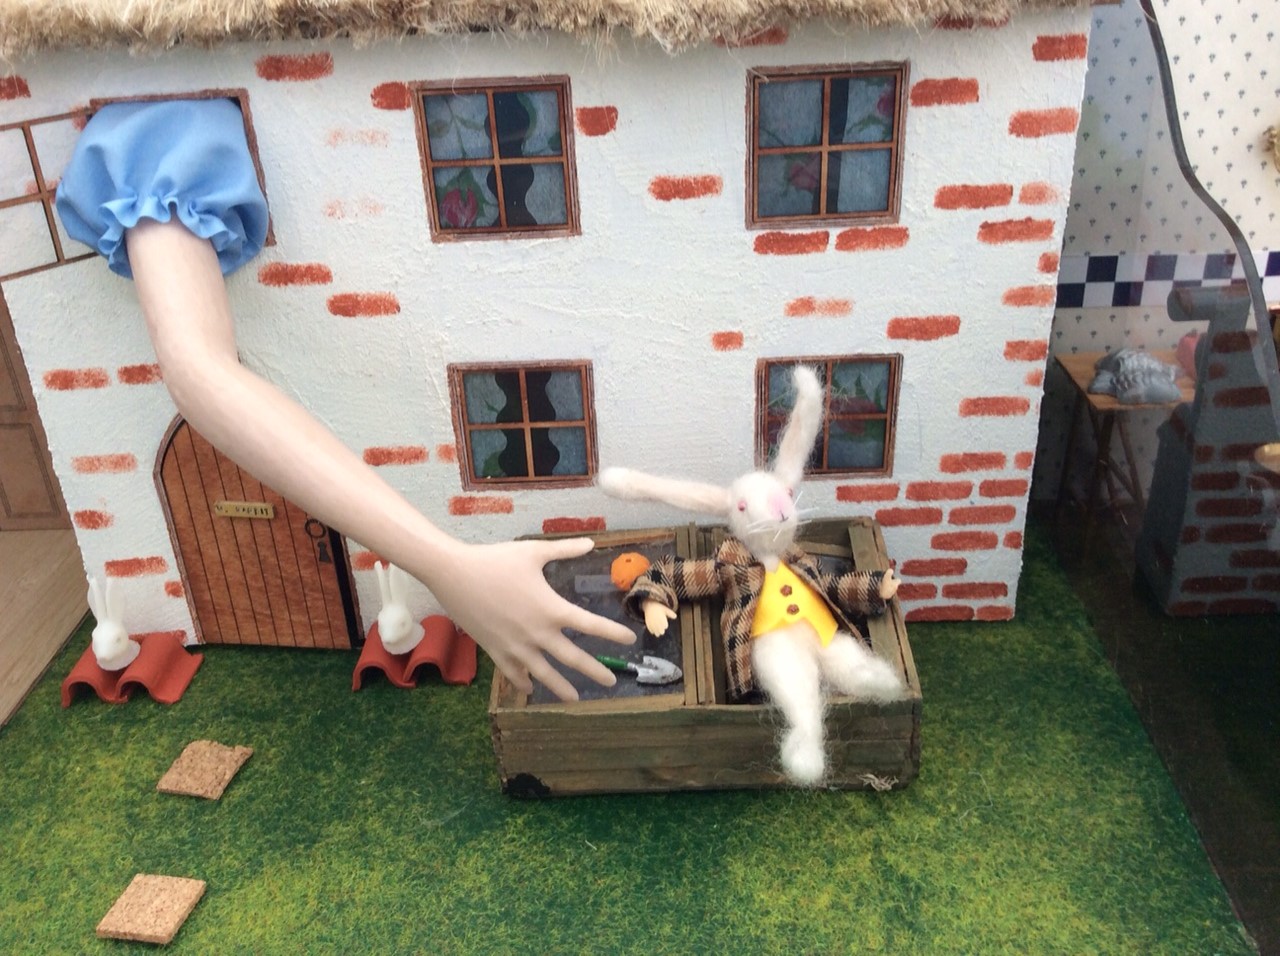 The White rabbits house